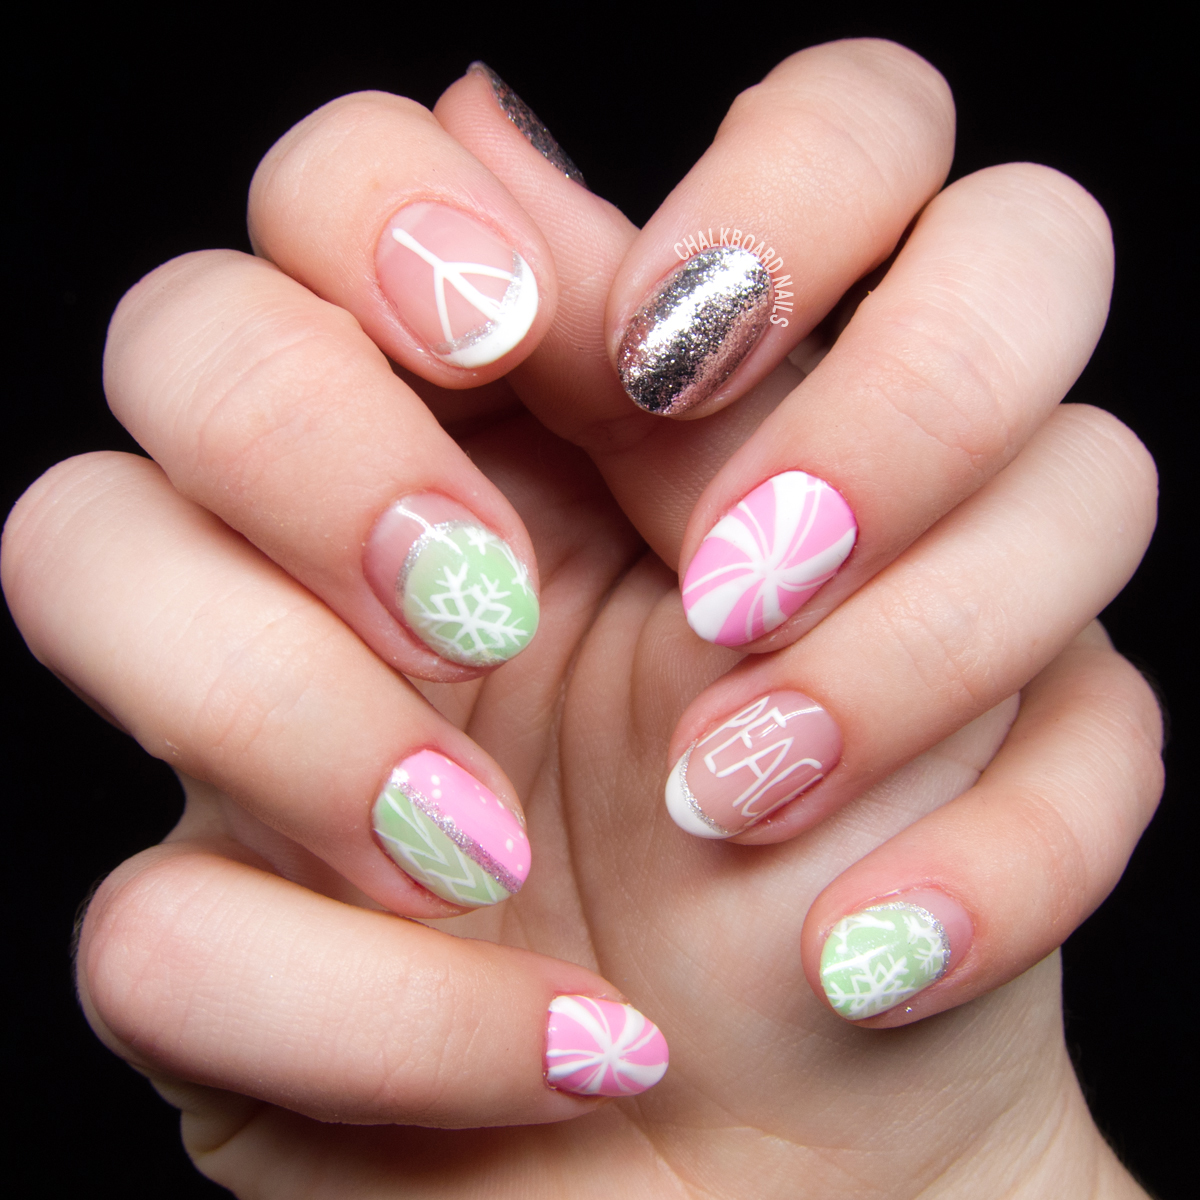 Marshmallow Winter nails